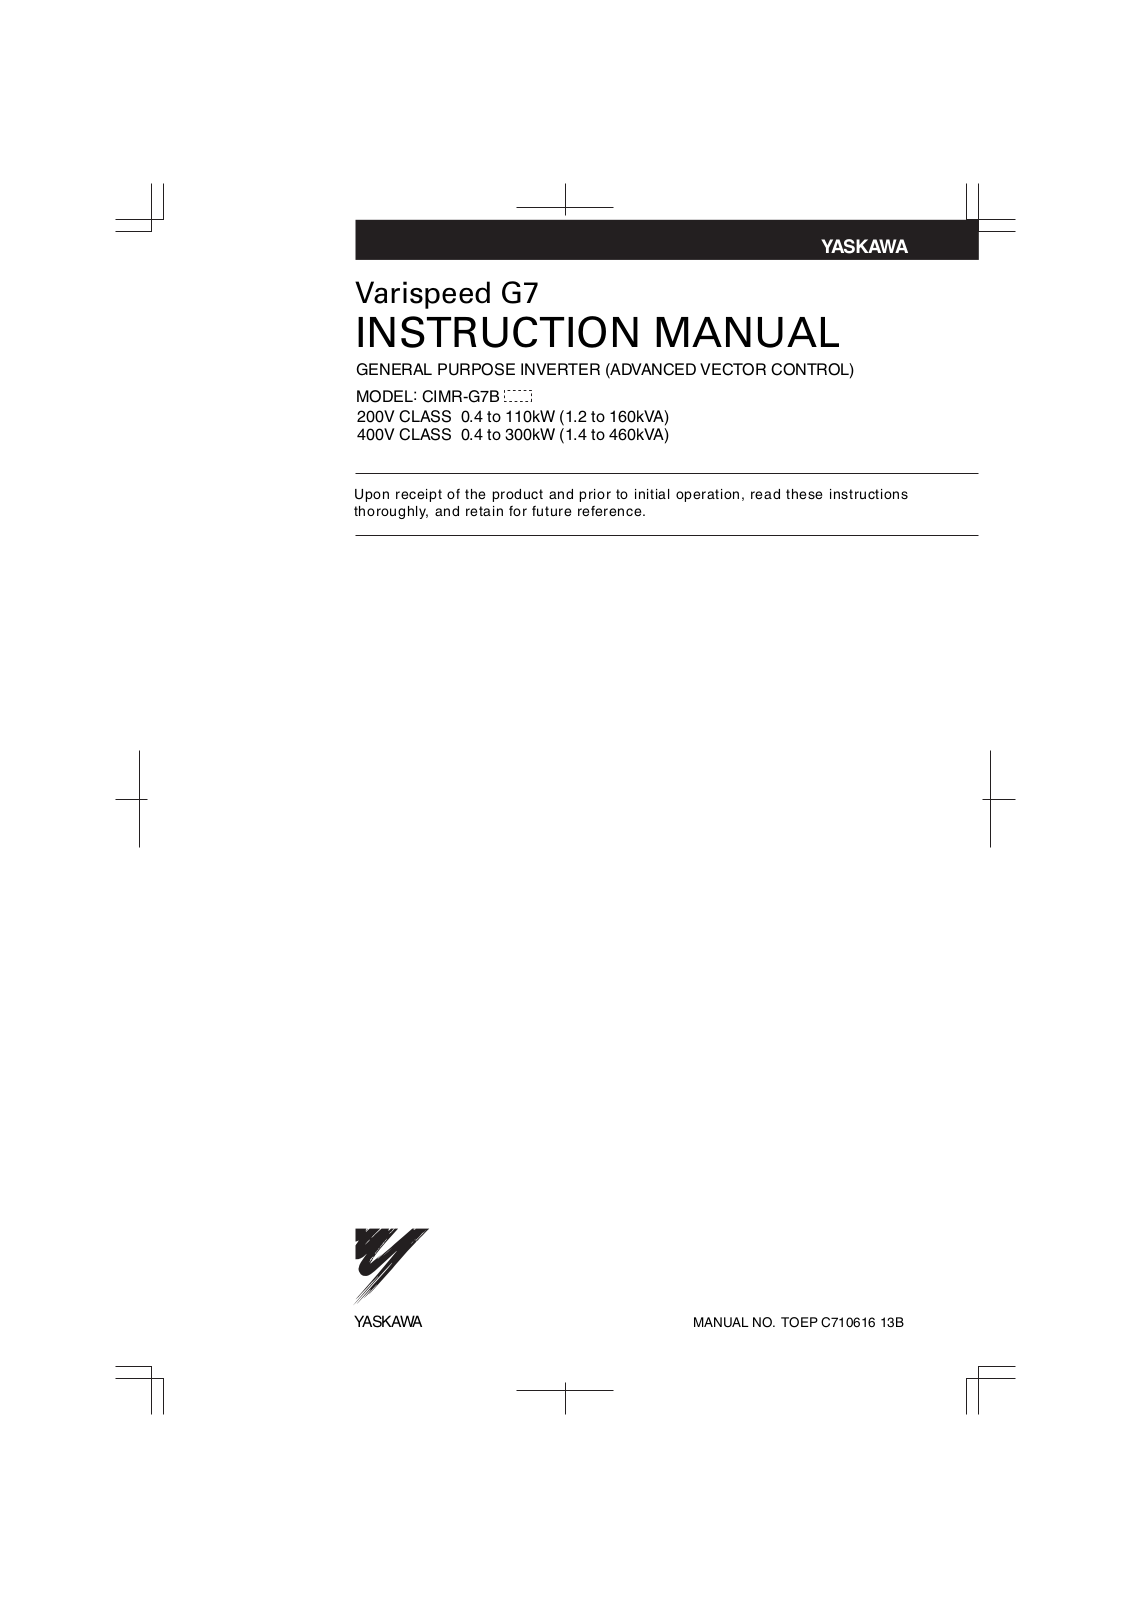 YASKAWA Varispeed G7 Instruction Manual